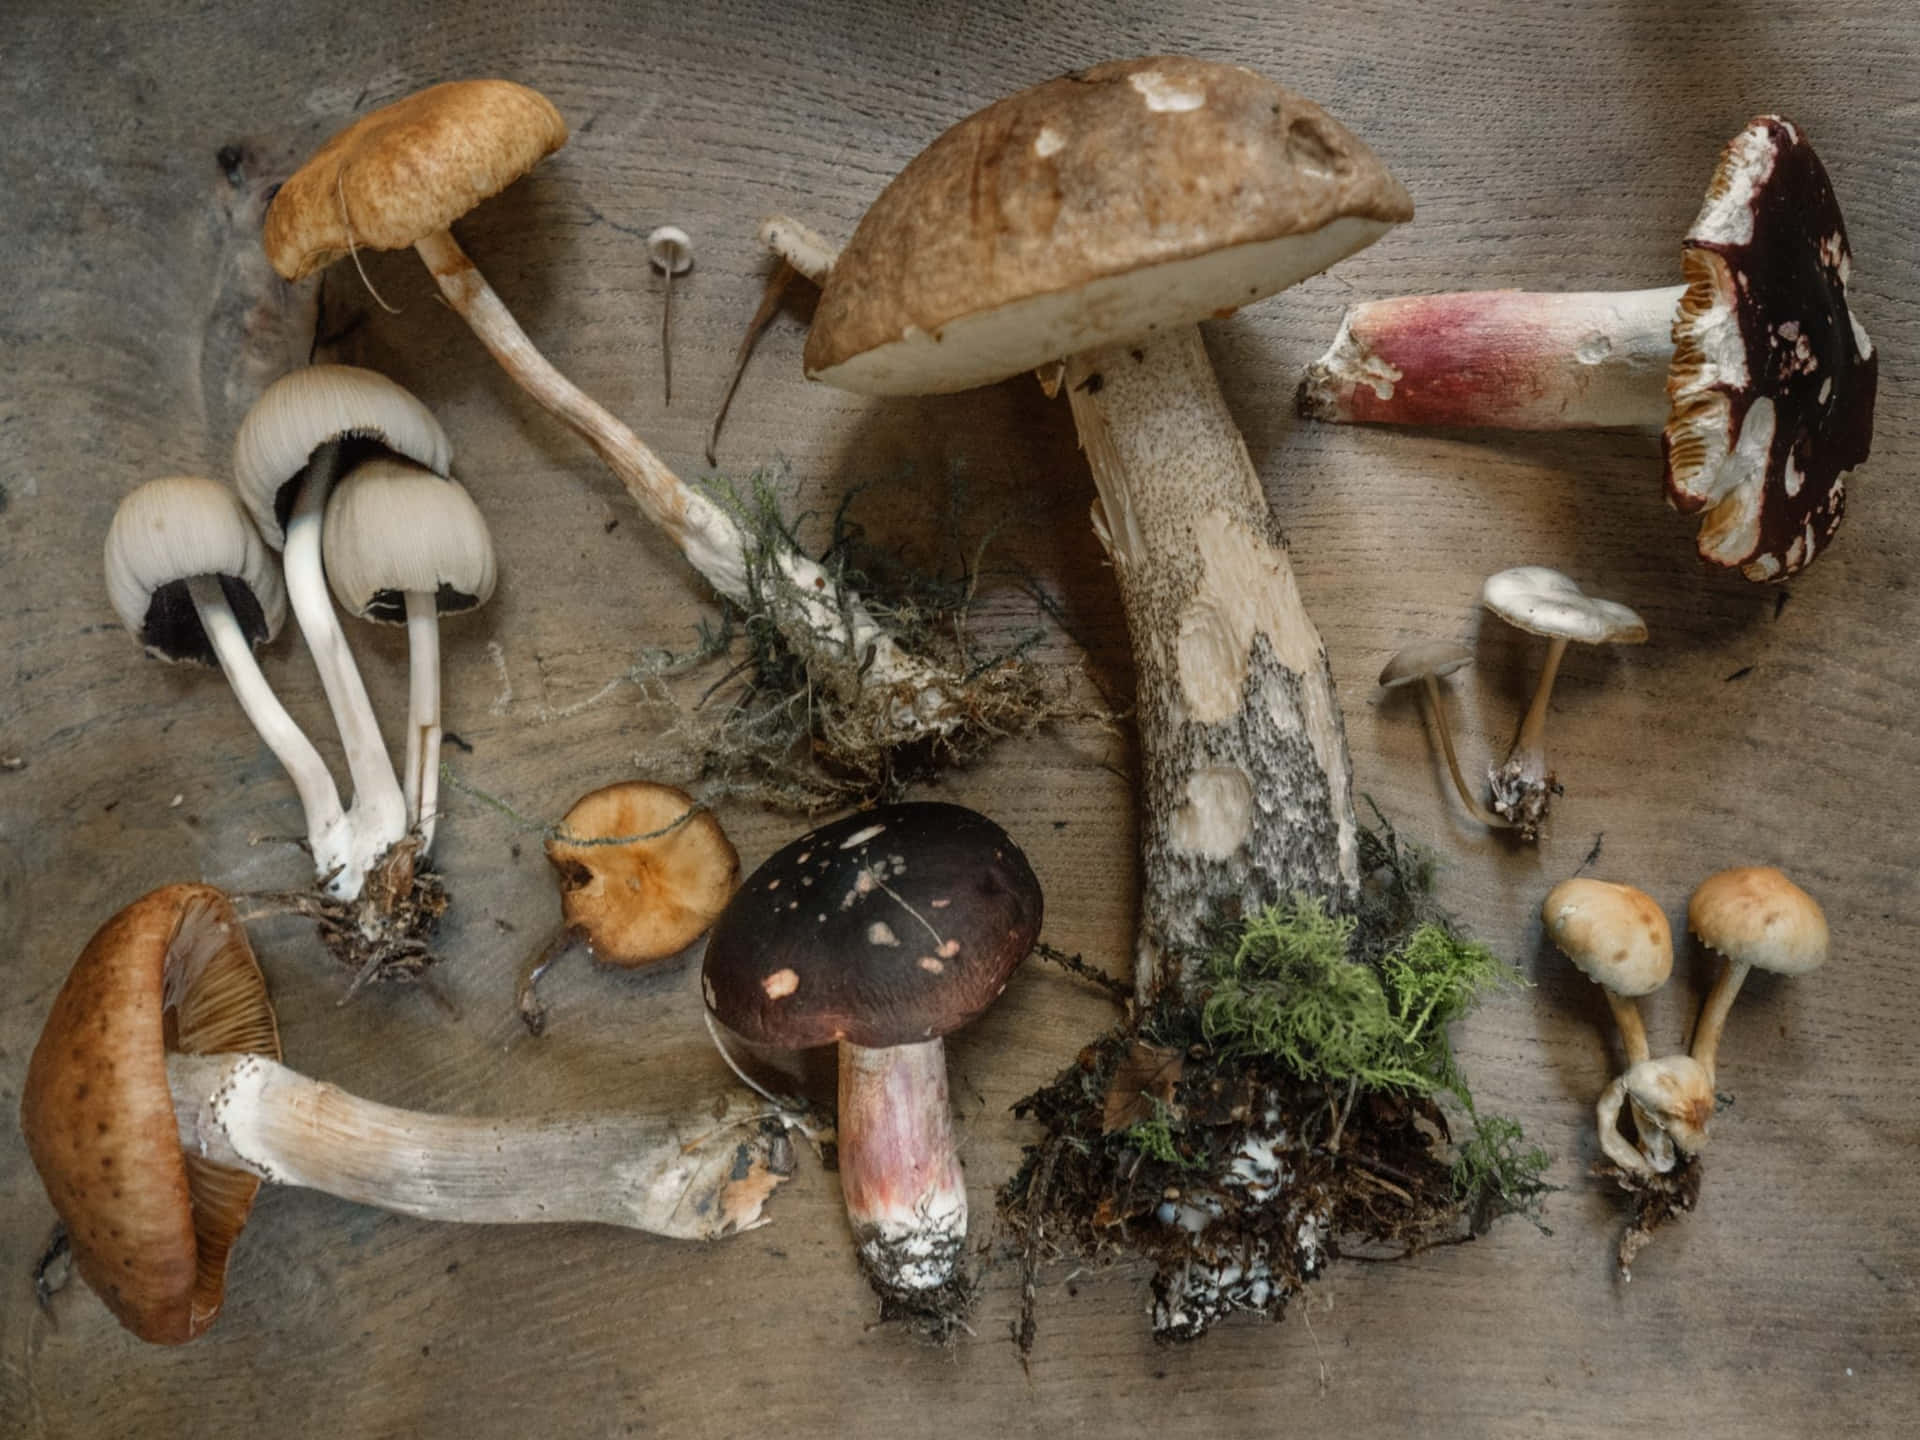 A vibrant display of various mushroom types in their natural habitat.